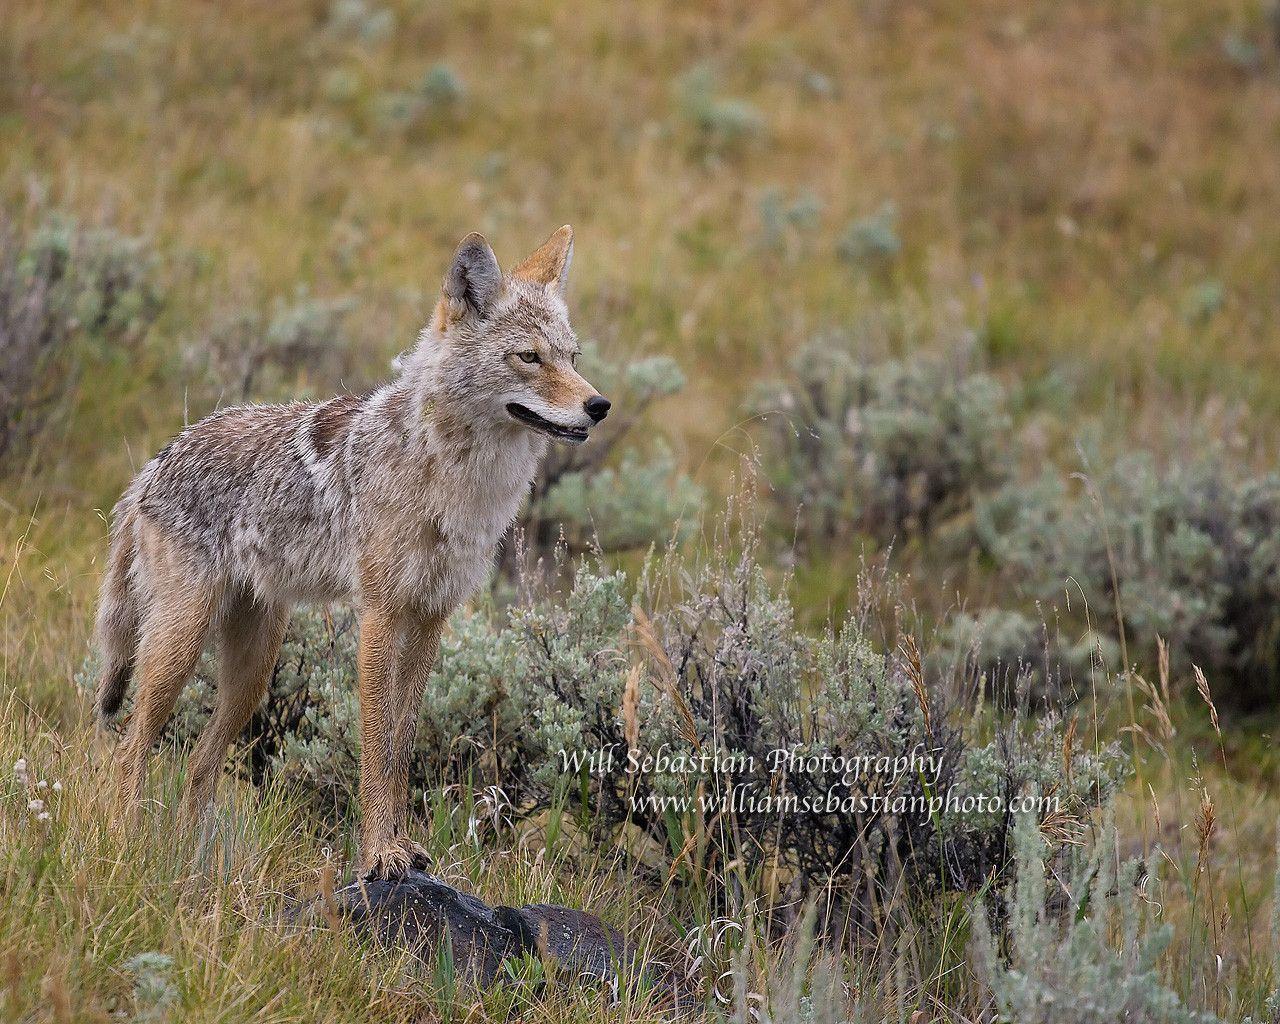 William Sebastian Photography coyote